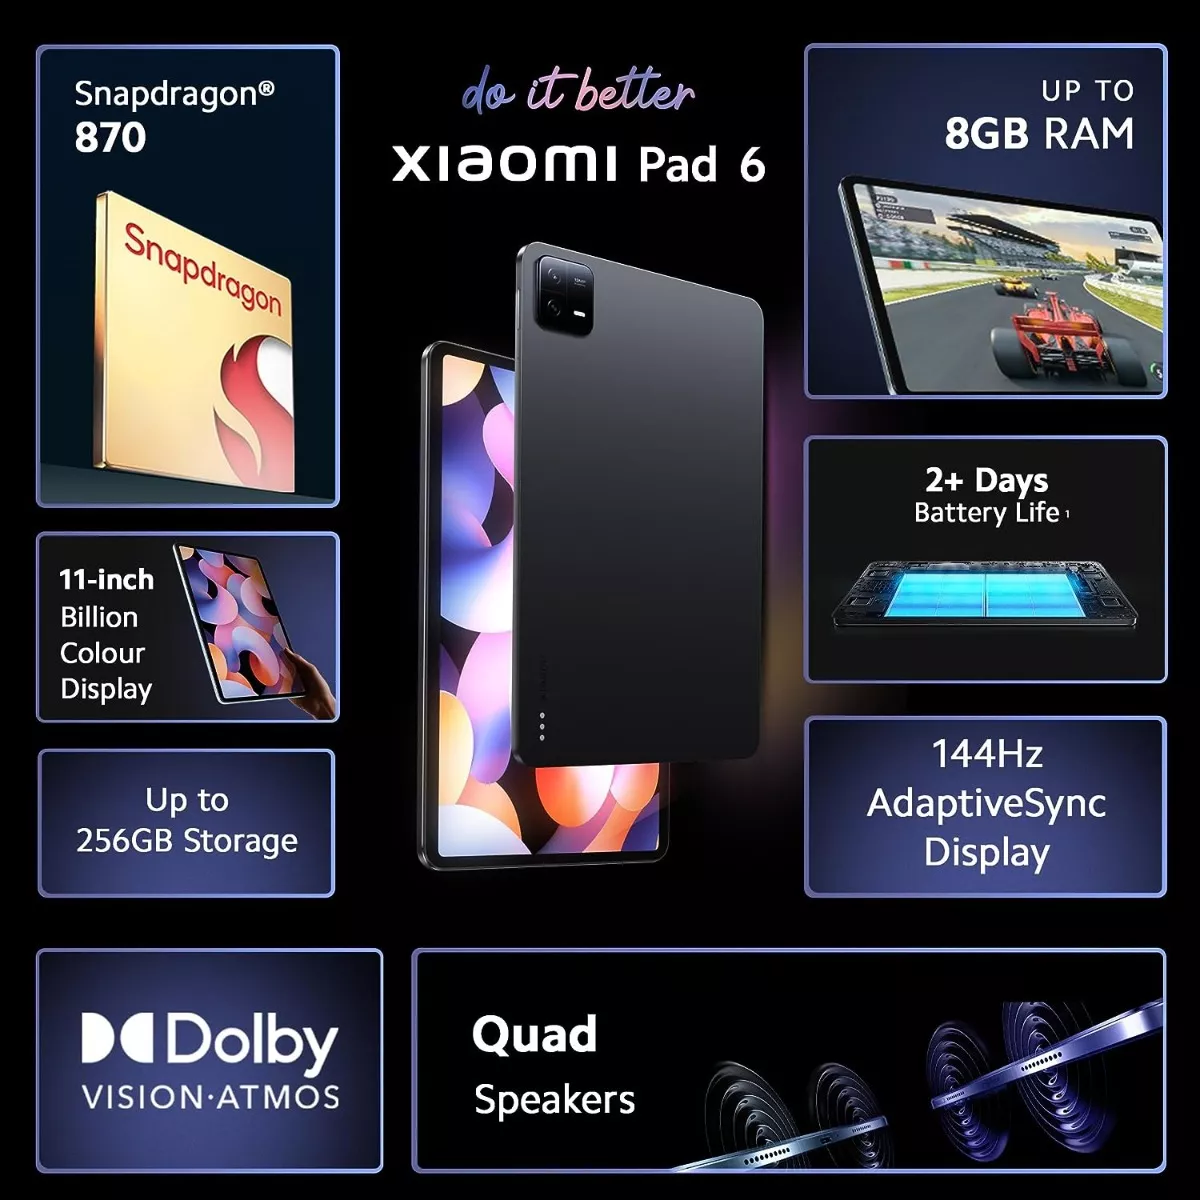  Xiaomi Redmi Pad SE Only WiFi 11 Octa Core 4 Speakers